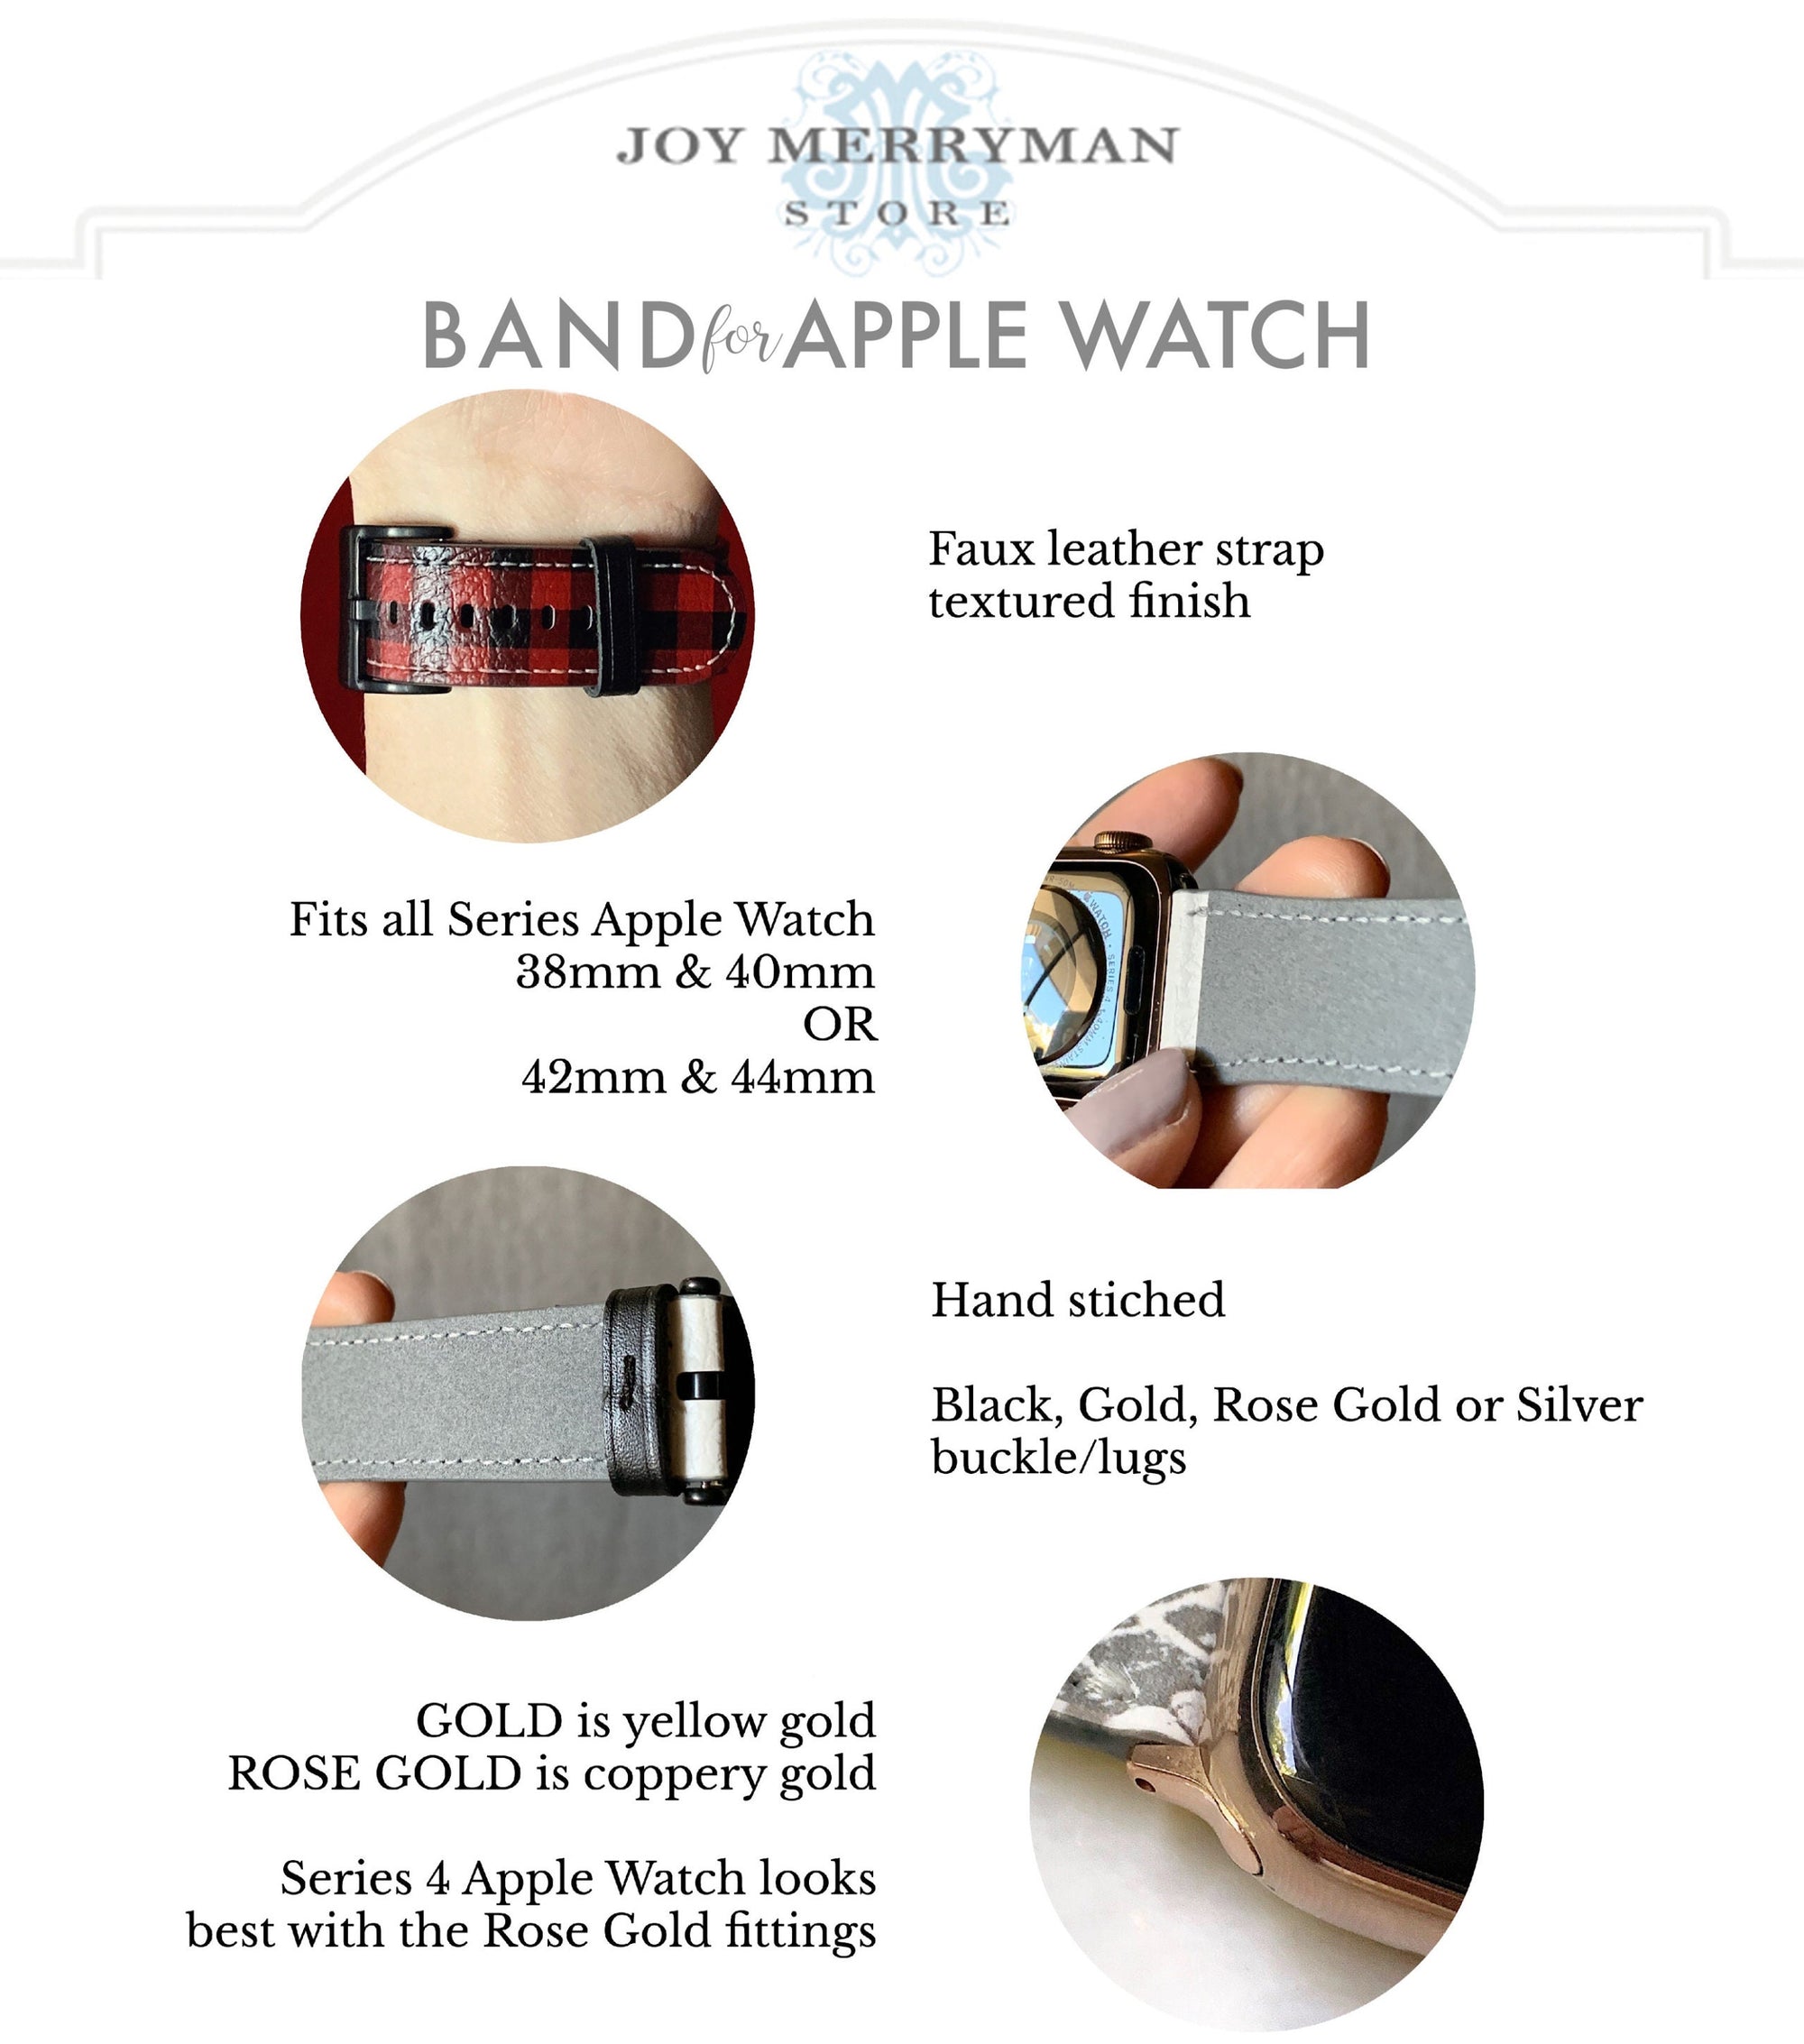 Black and White Polka Dot Apple Watch Band